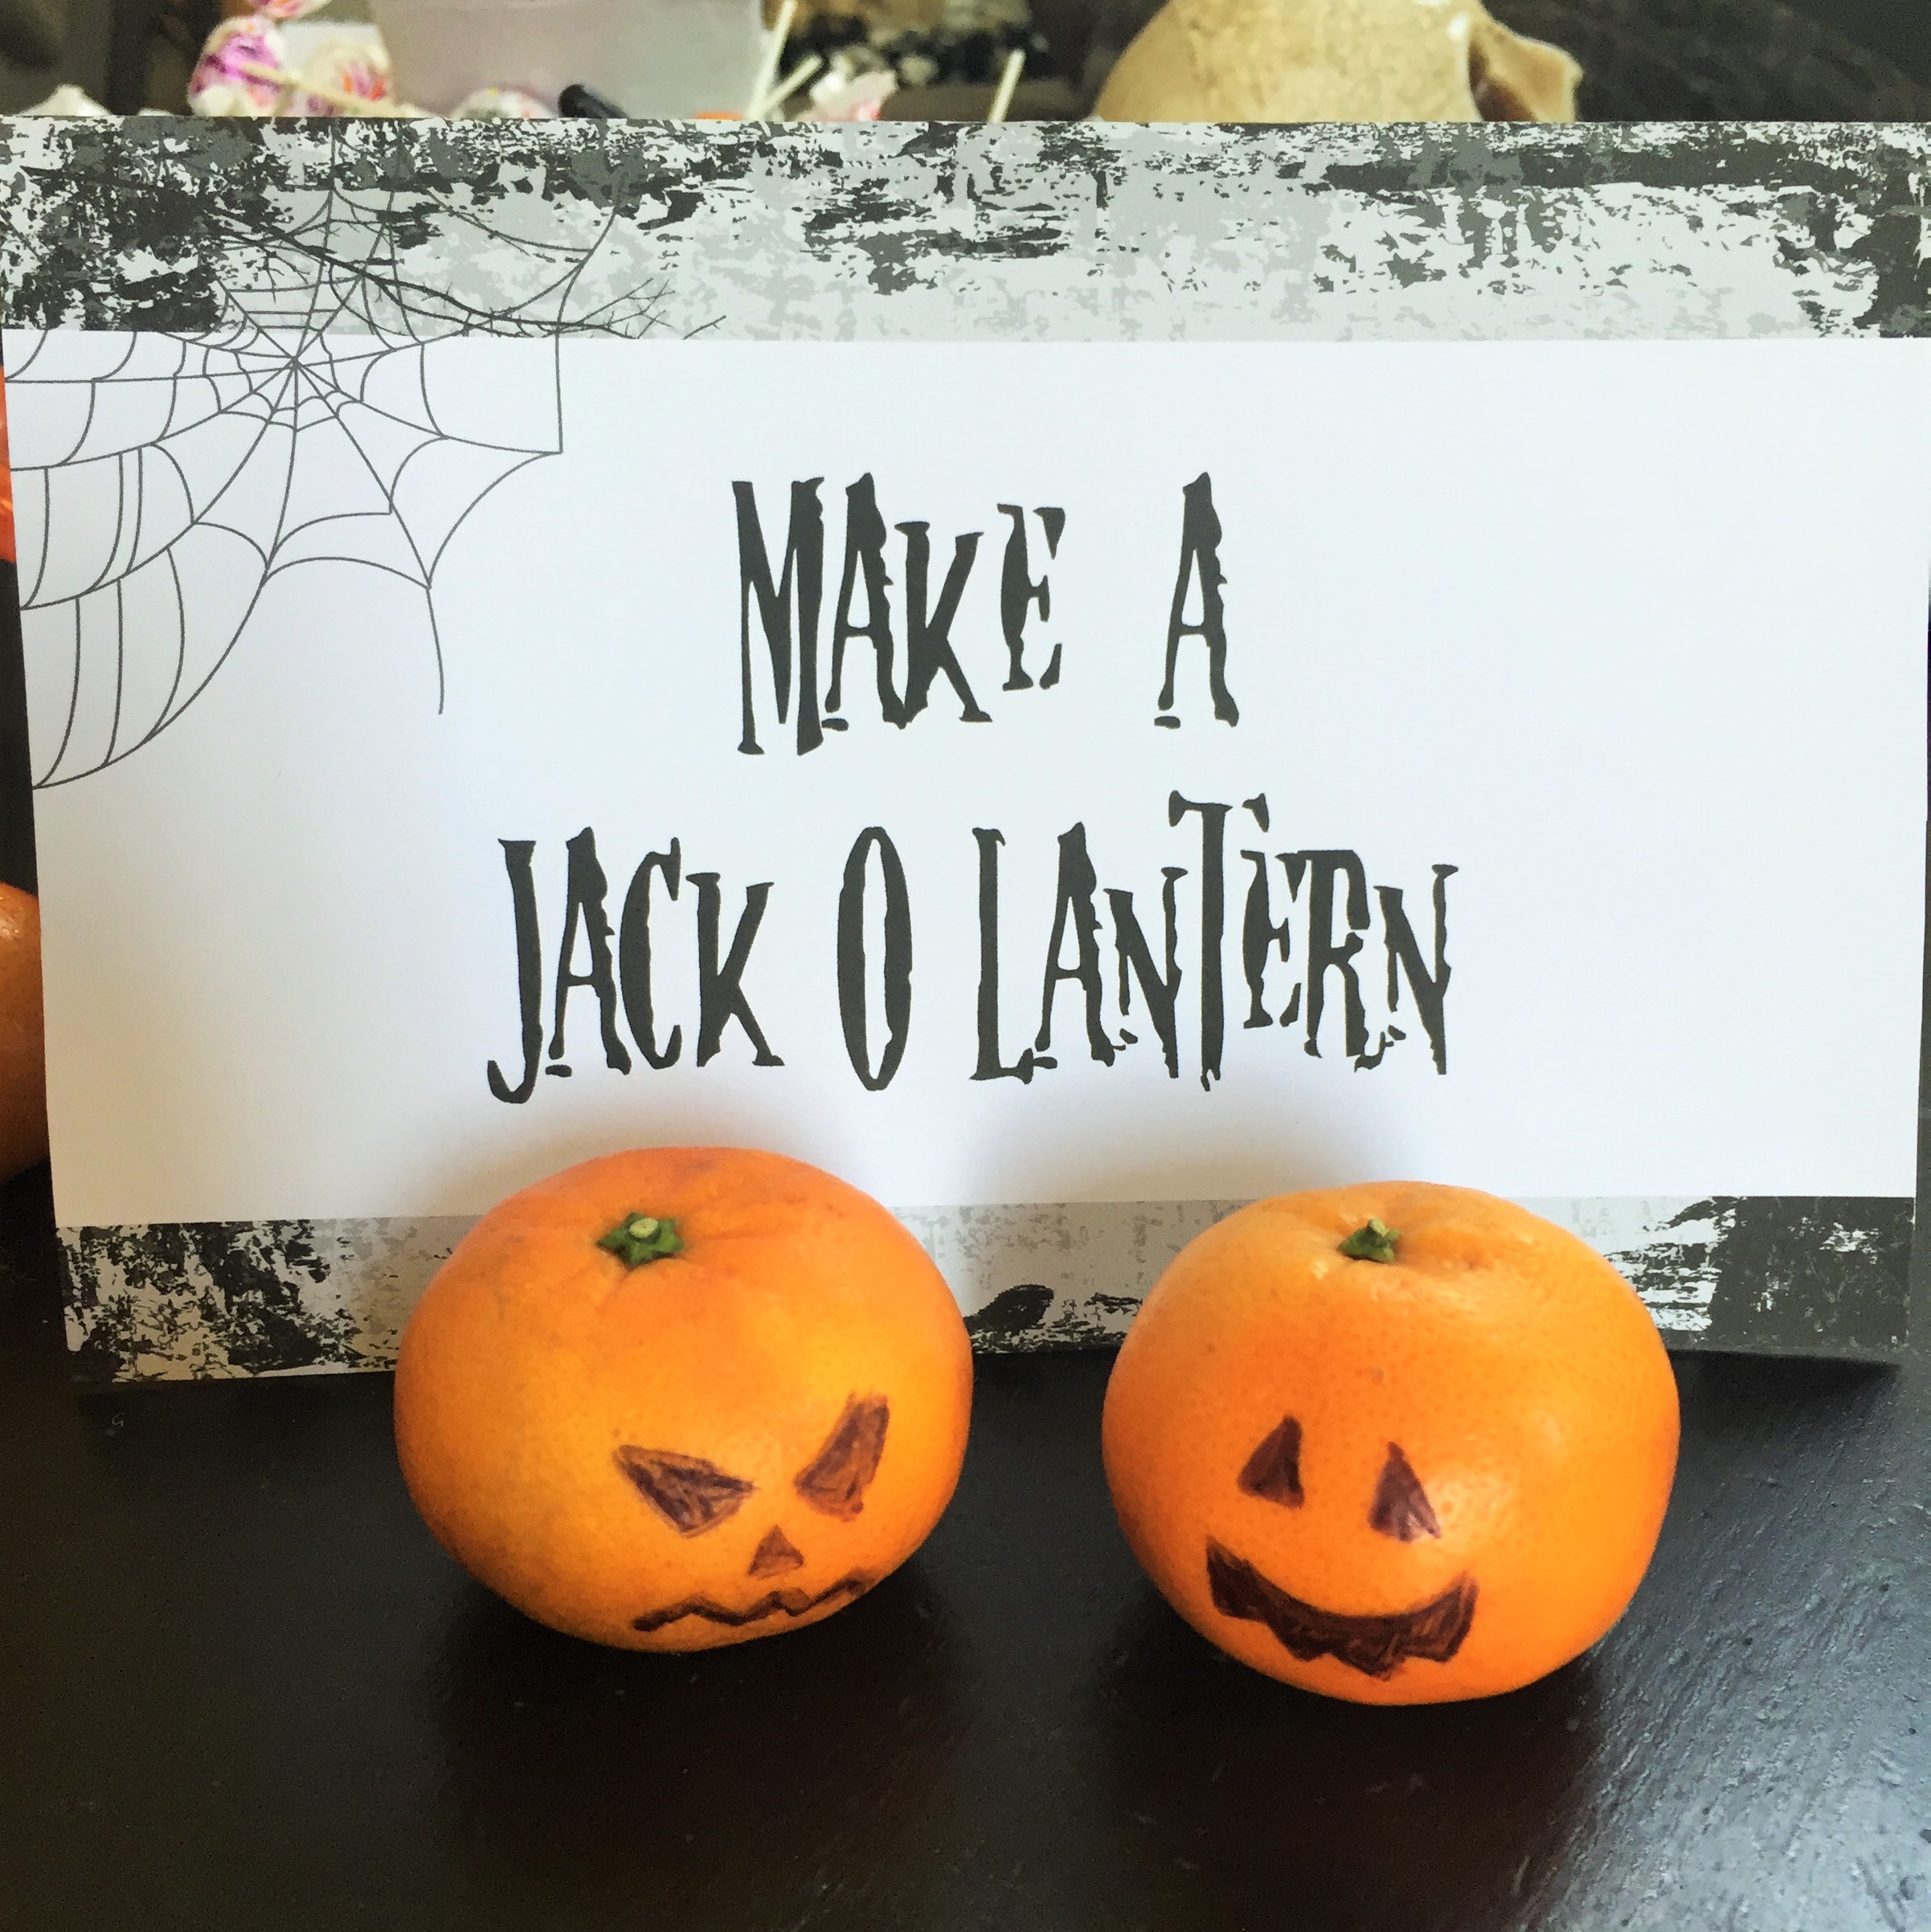 kid friendly halloween party ideas - make a jack-o-lantern orange